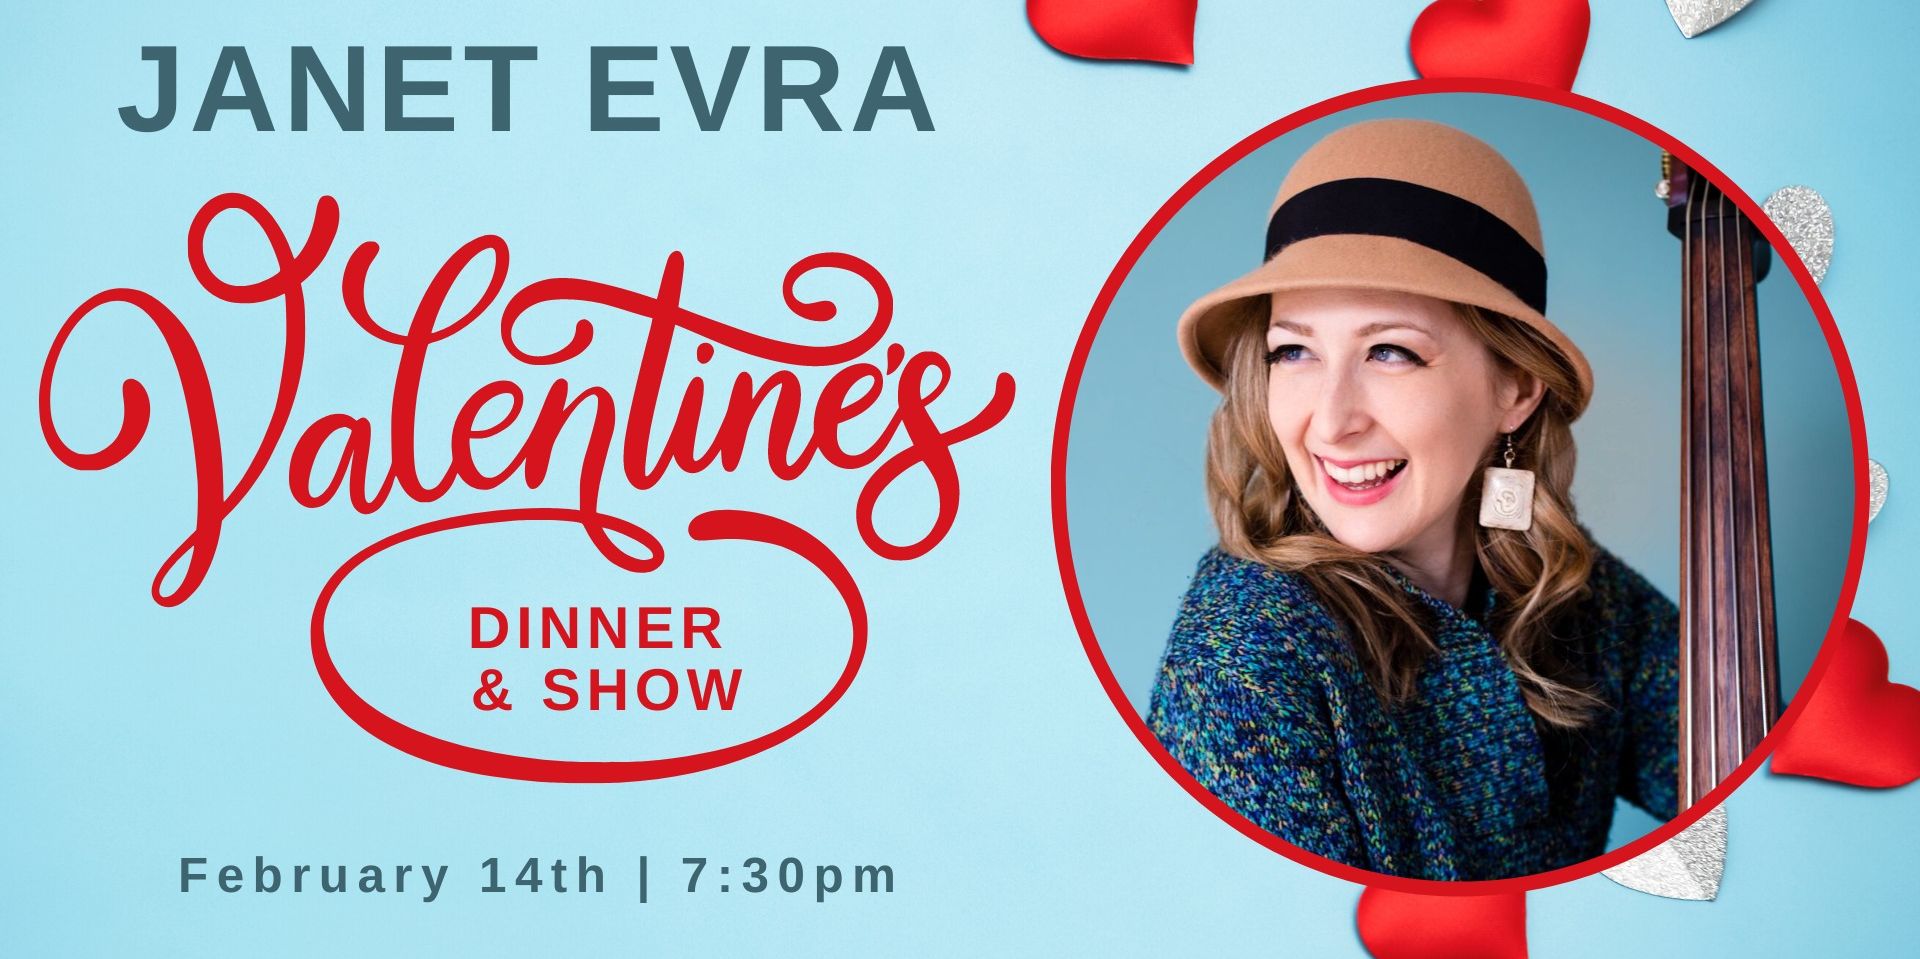 Janet Evra - Valentine's Dinner & Show promotional image